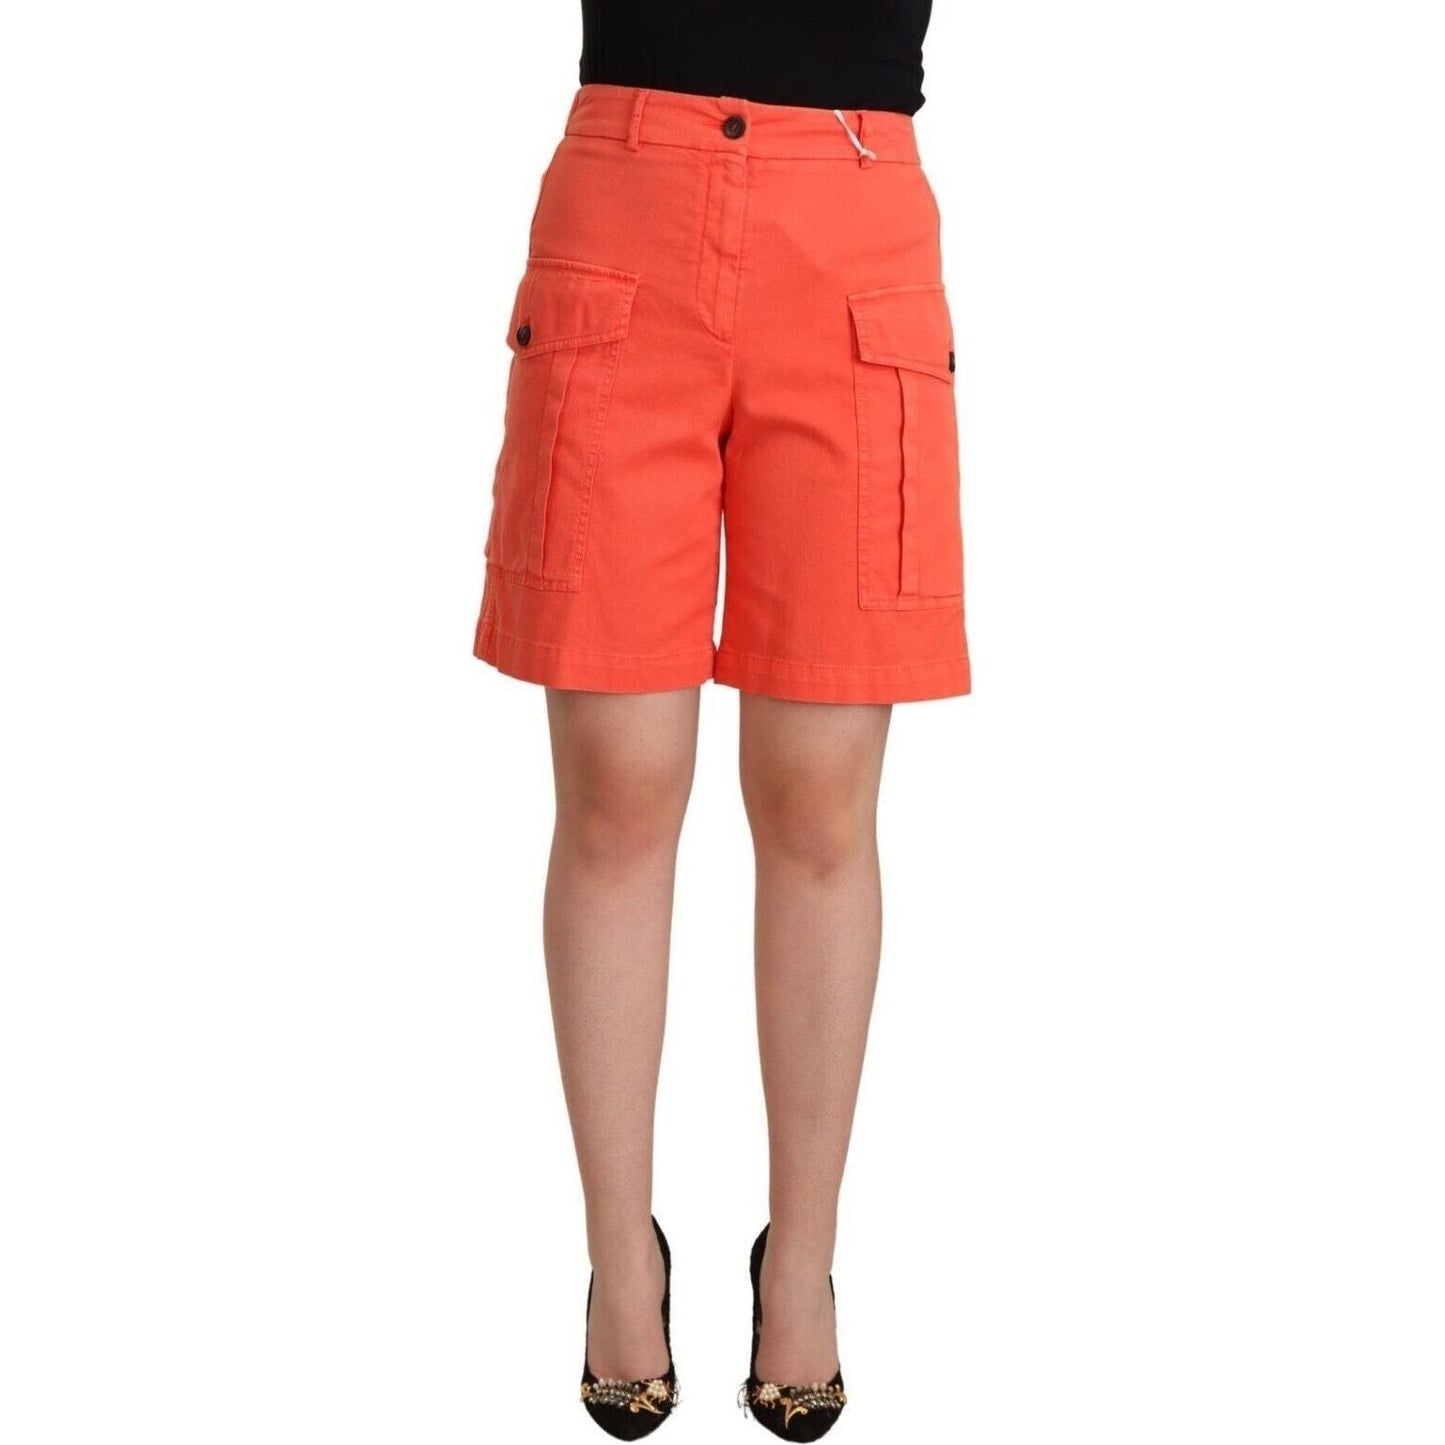 Peserico Chic High-Waisted Cargo Shorts in Vibrant Orange orange-cotton-high-waist-cargo-casual-shorts s-l1600-36-5-7acf91b6-cdd.jpg